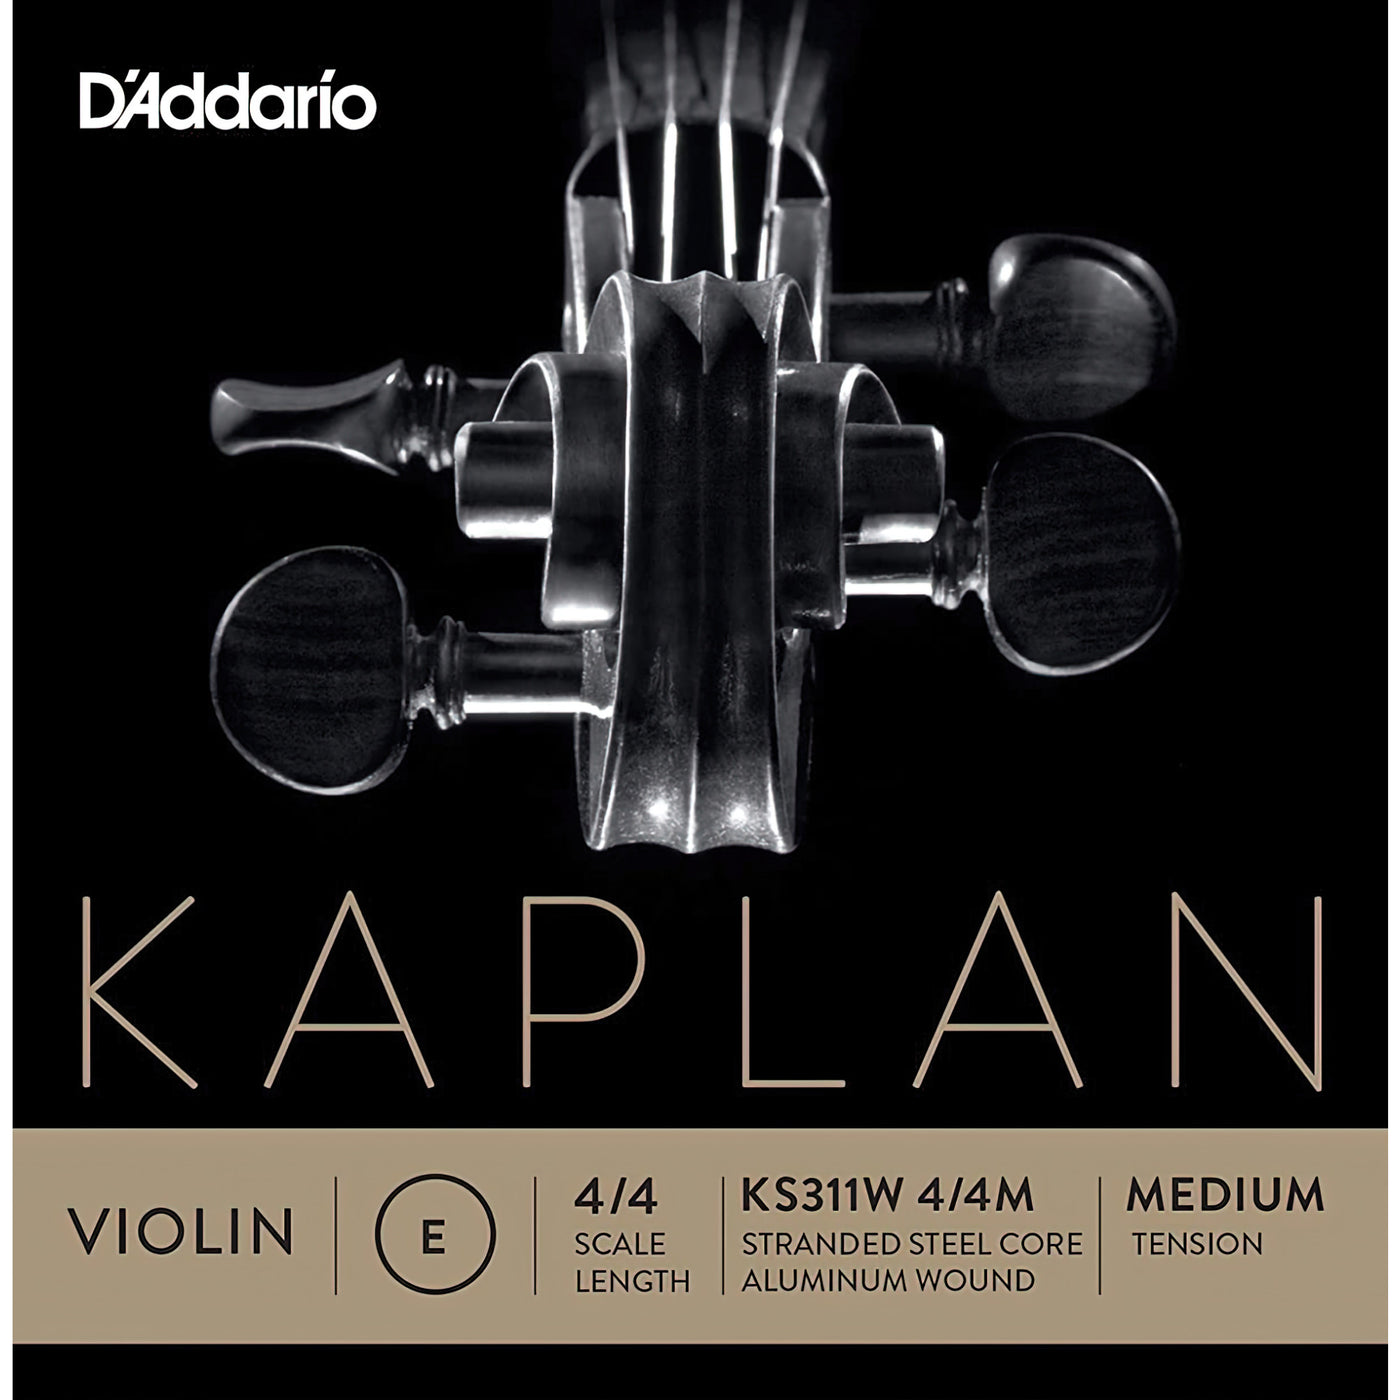 D'Addario KS311 Kaplan Non-whistling Violin E String, 4/4 Size Wound (KS311W 4/4M)